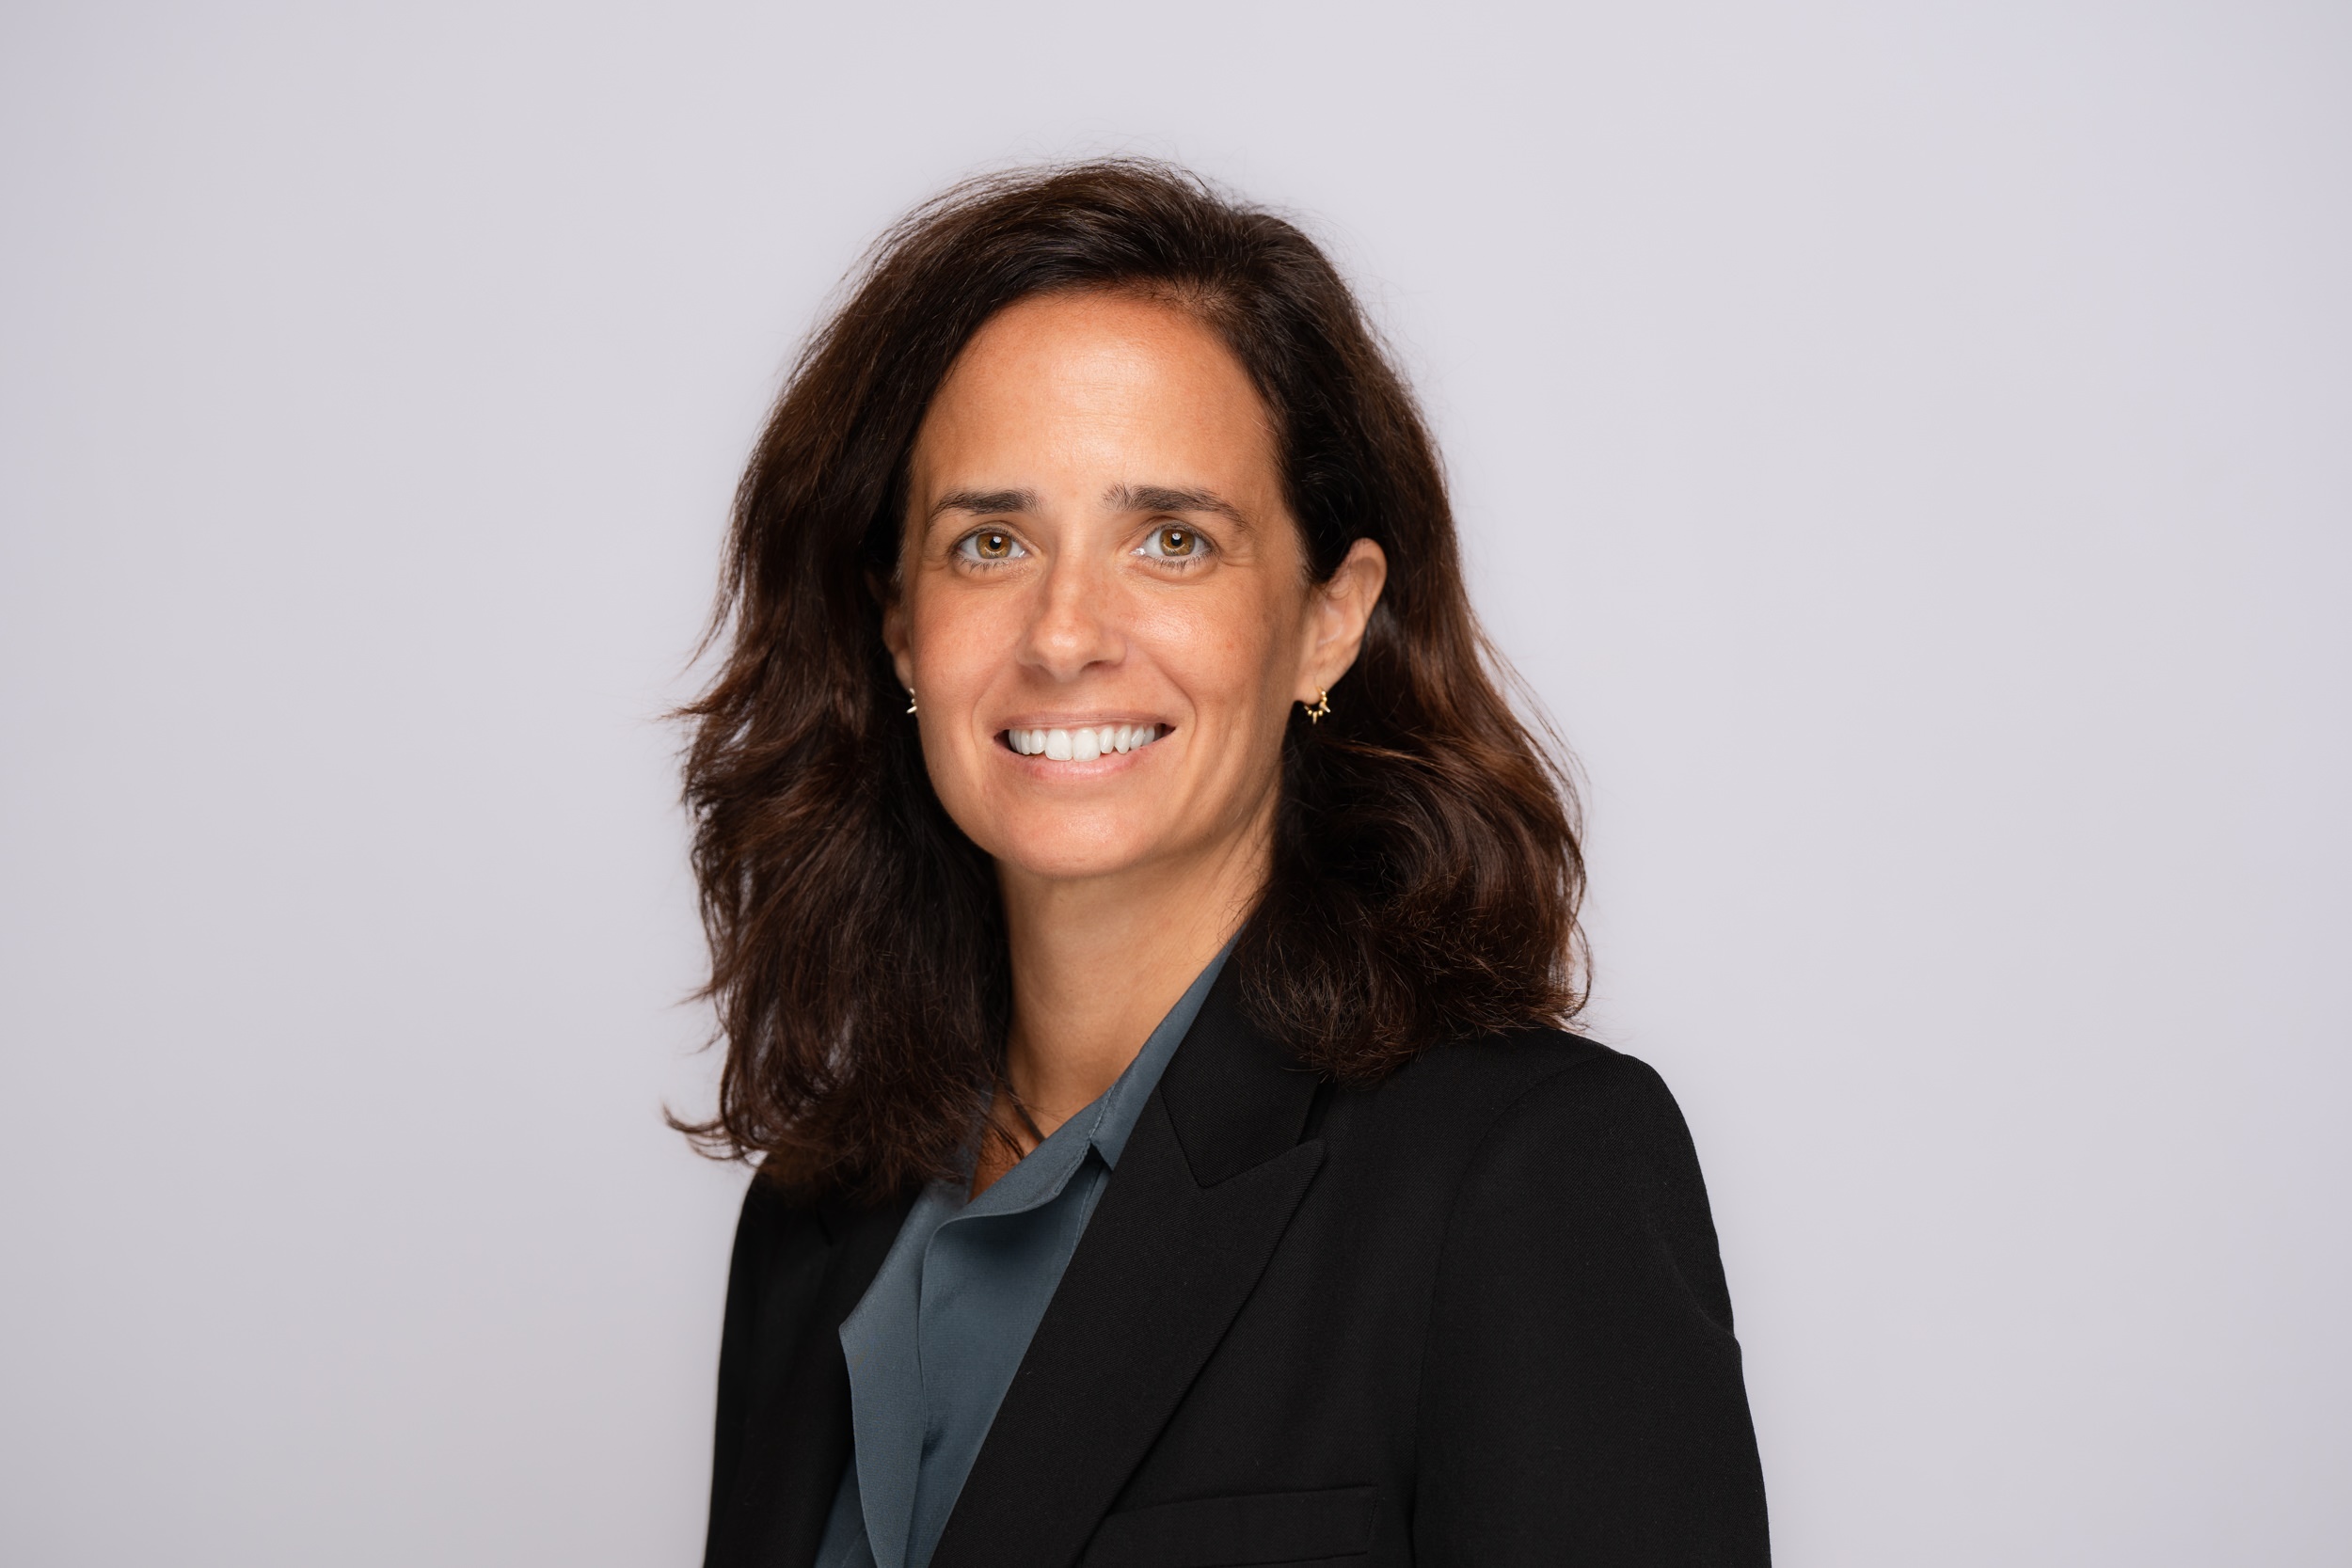 Lucía Gutiérrez-Mellado (JP Morgan) se incorpora como miembro externo al comité de inversión de iCapital